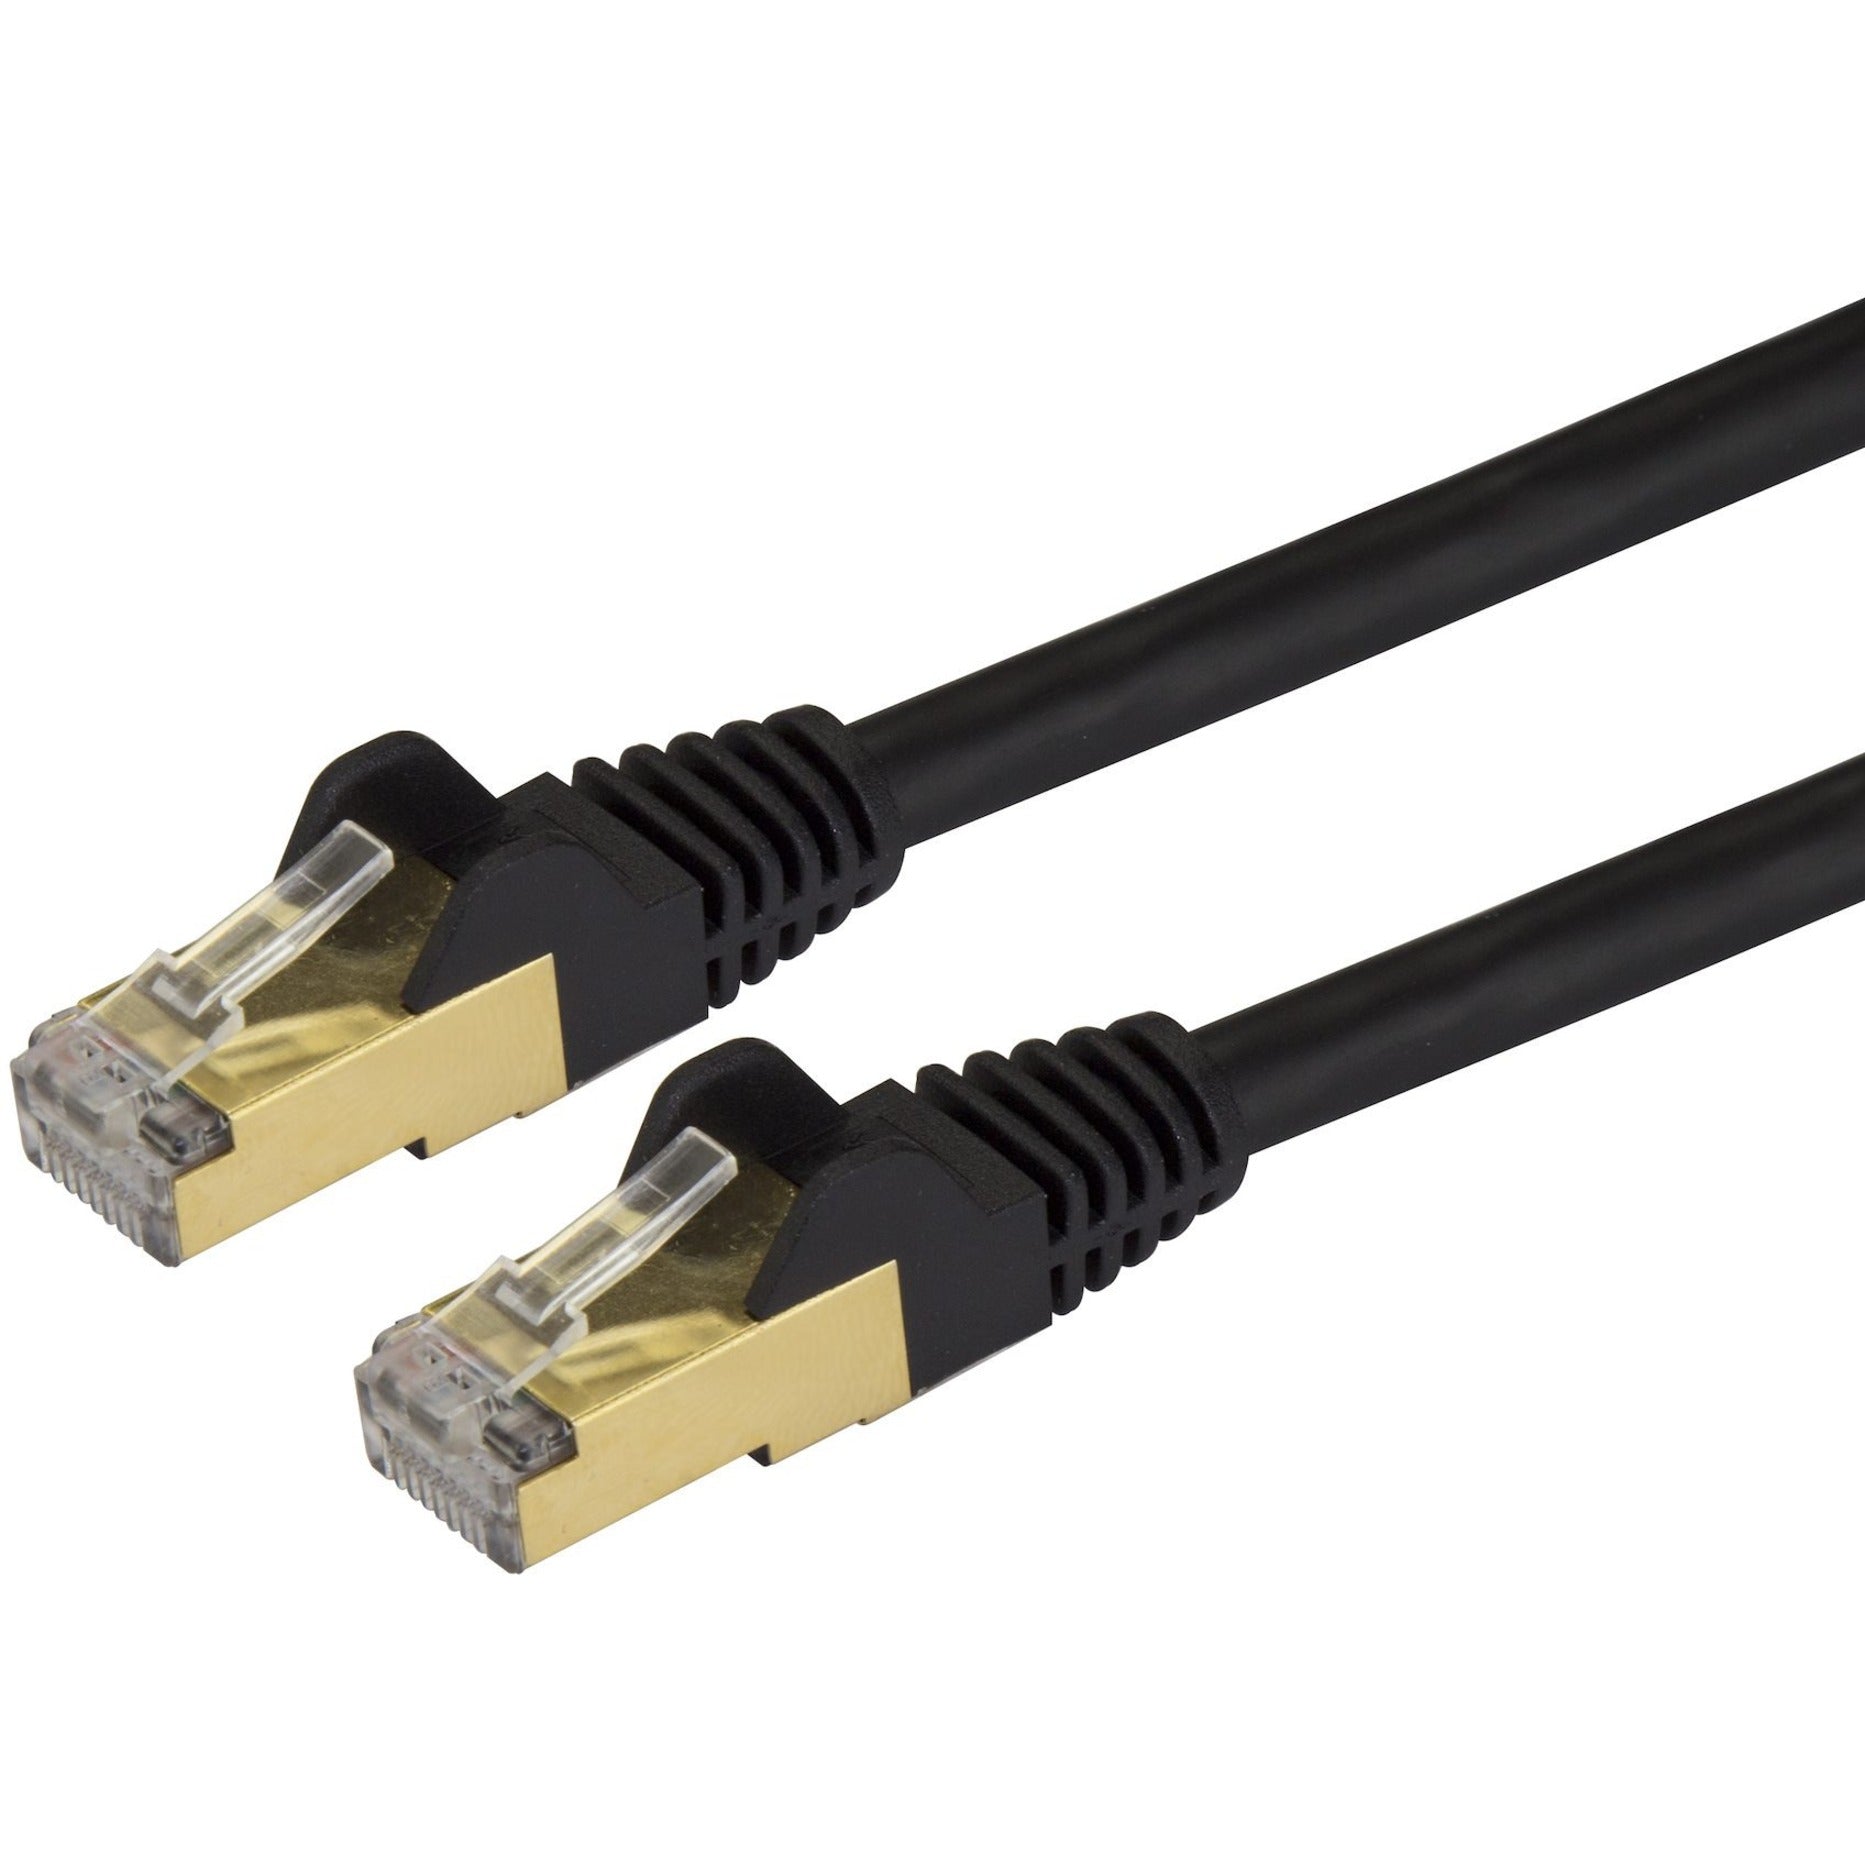 StarTech.com C6ASPAT2BK Cat6a Ethernet Patch Cable - Shielded (STP) - 2 ft., Black, Snagless RJ45 Ethernet Cord